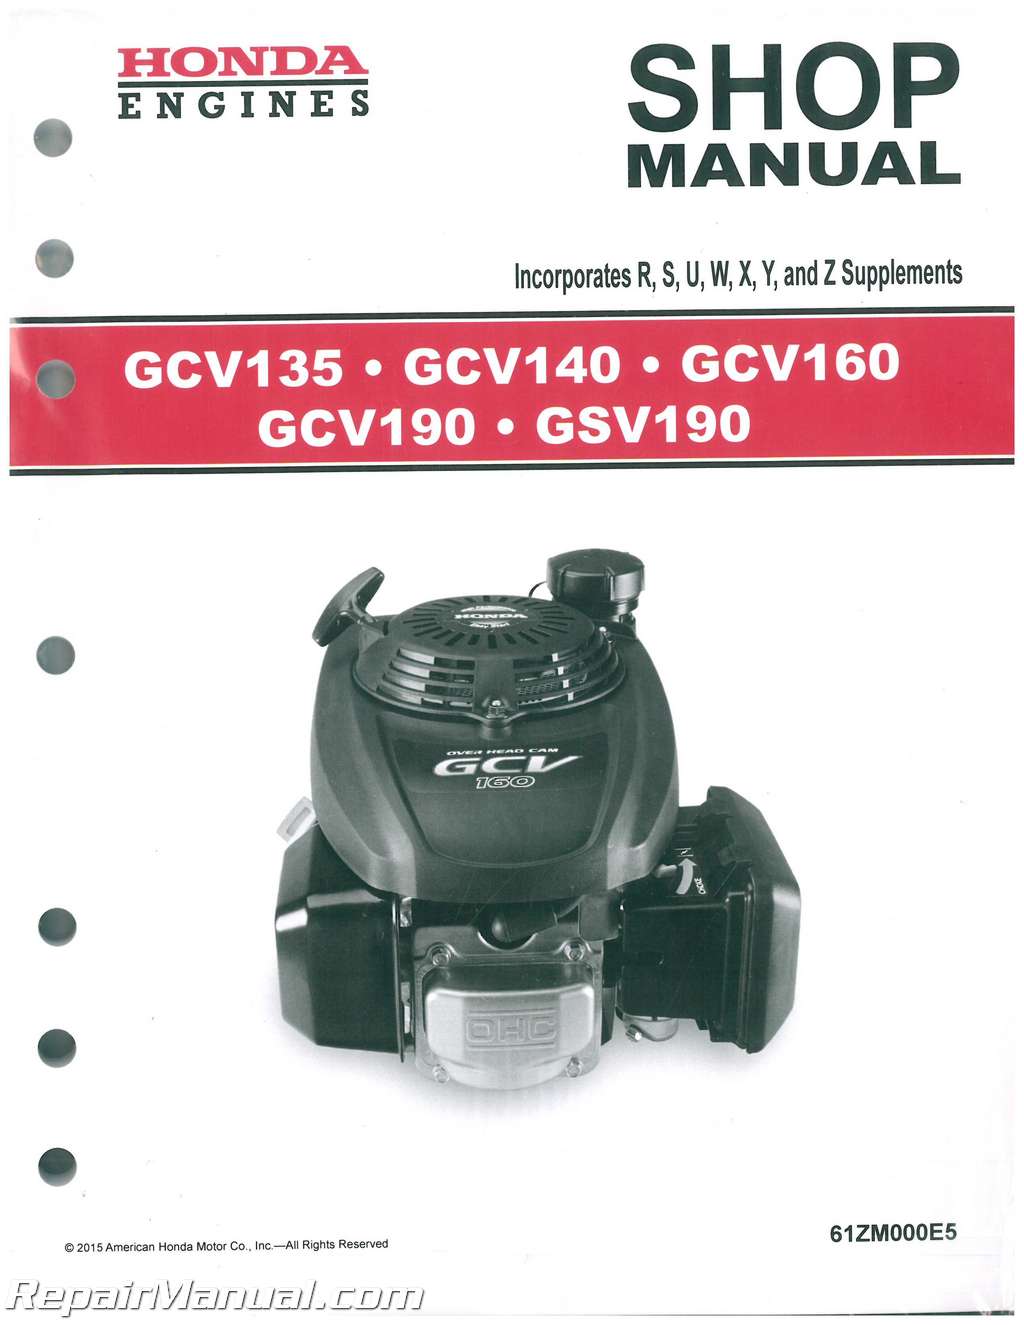 Honda Gcv160 Shop Manual Pdf